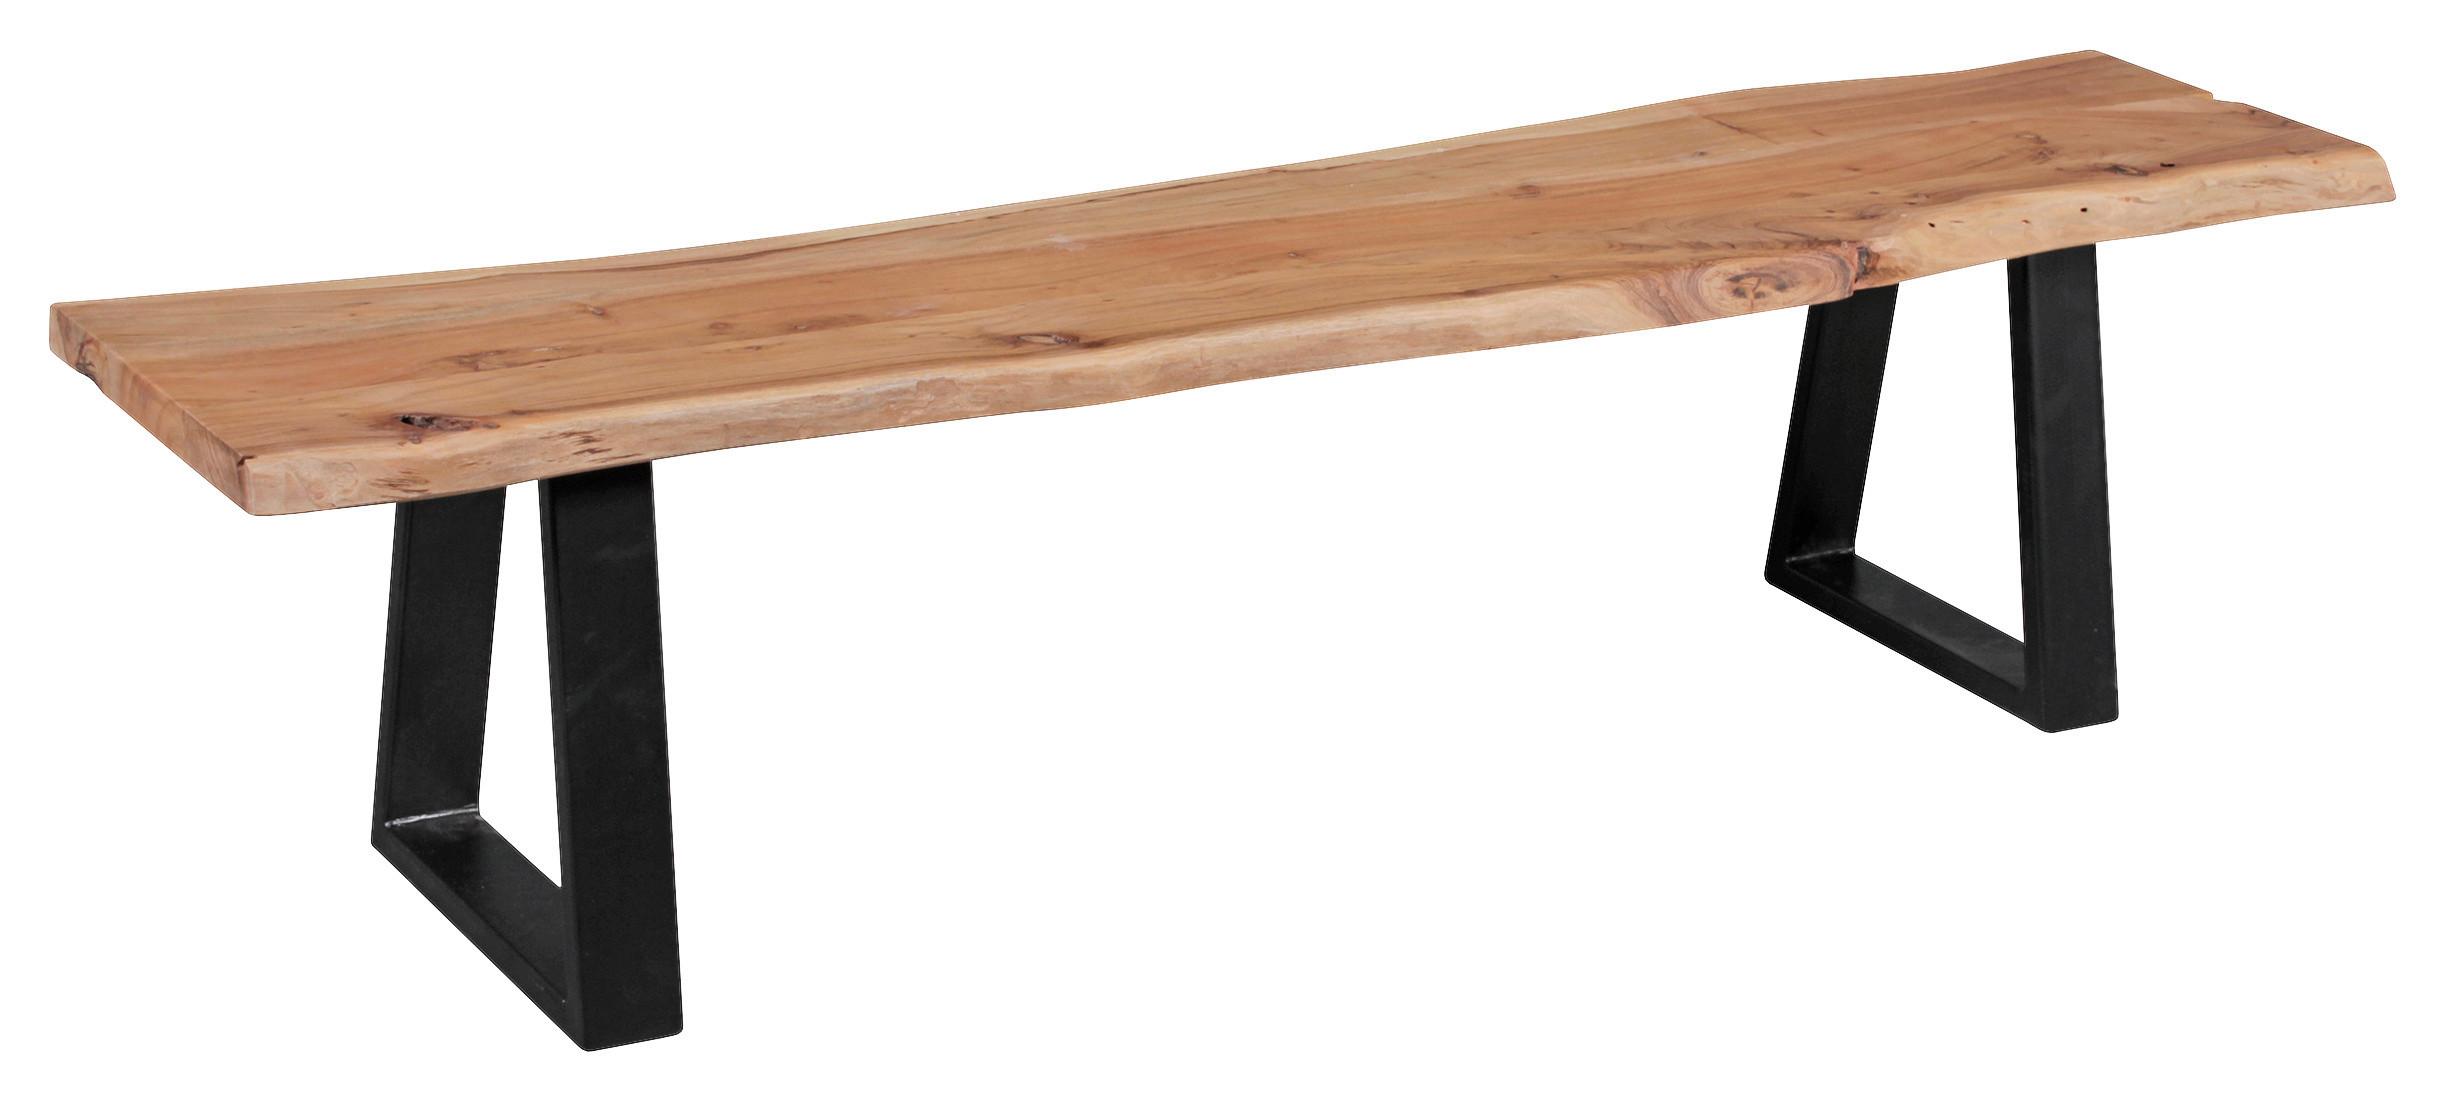 Lavice Z Masivního Dřeva Gaya Š: Ca. 160 Cm - černá/barvy akácie, Design, kov/dřevo (160/45/40cm) - MID.YOU